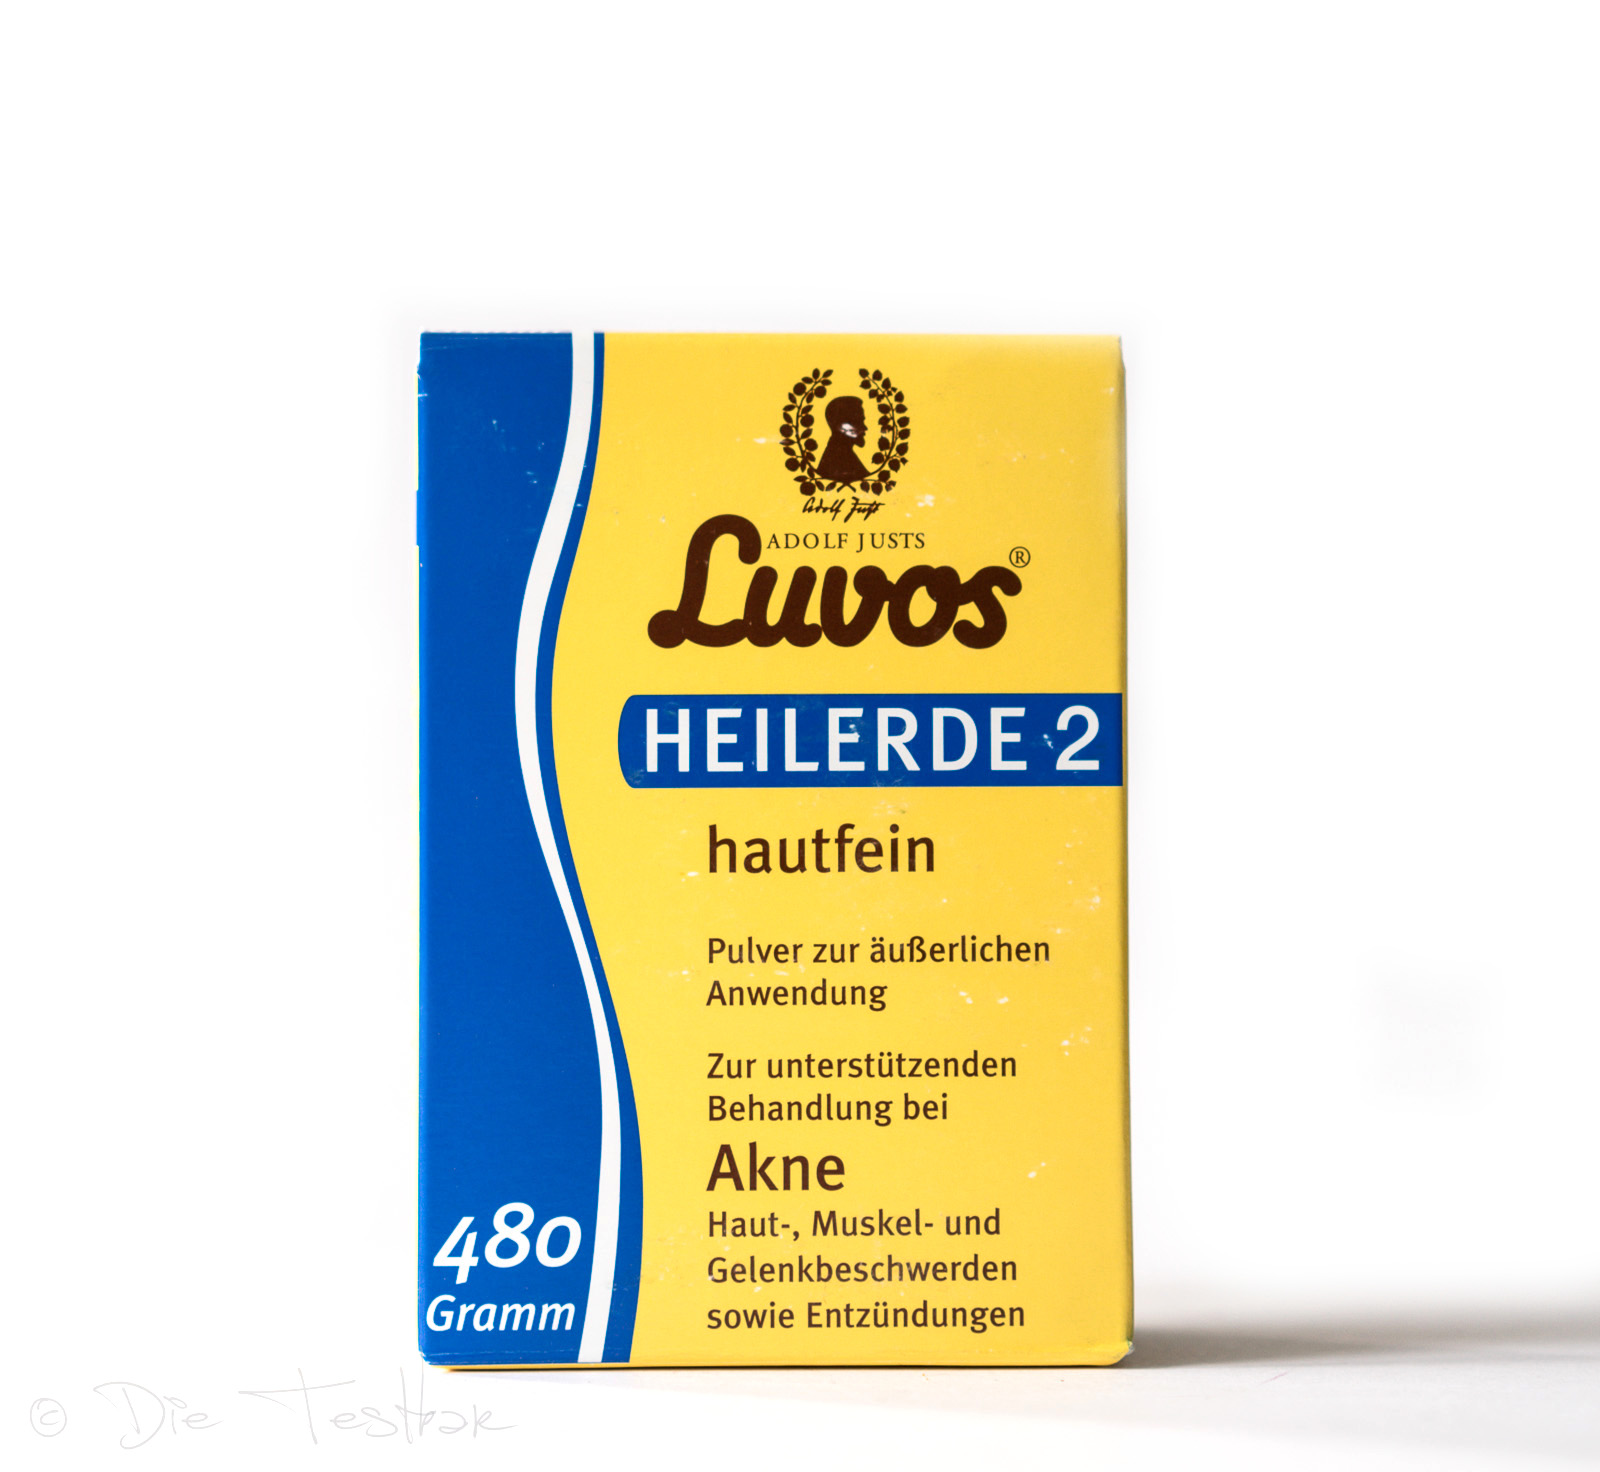 Adolf Justs Luvos-Heilerde 2 hautfein